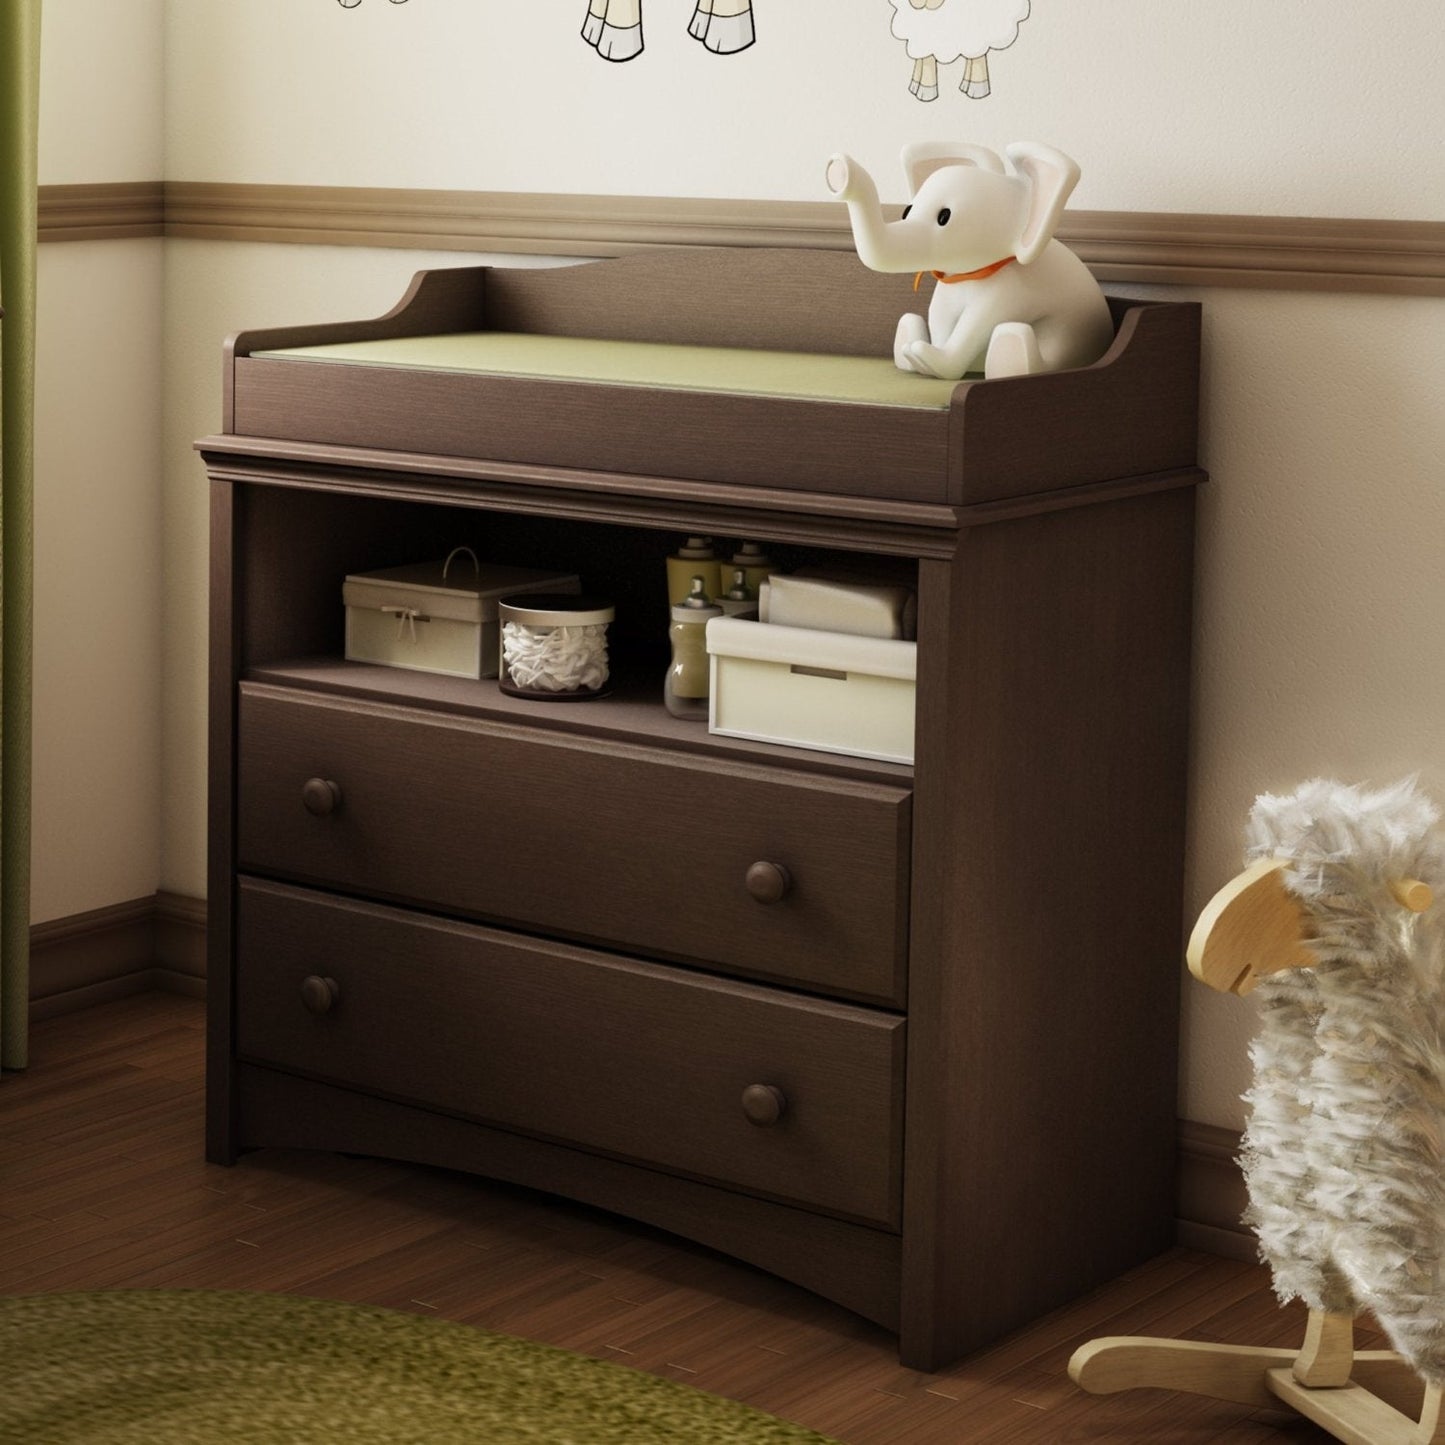 Bedroom > Kids Bedroom - Baby Furniture 2 Drawer Diaper Changing Table In Espresso